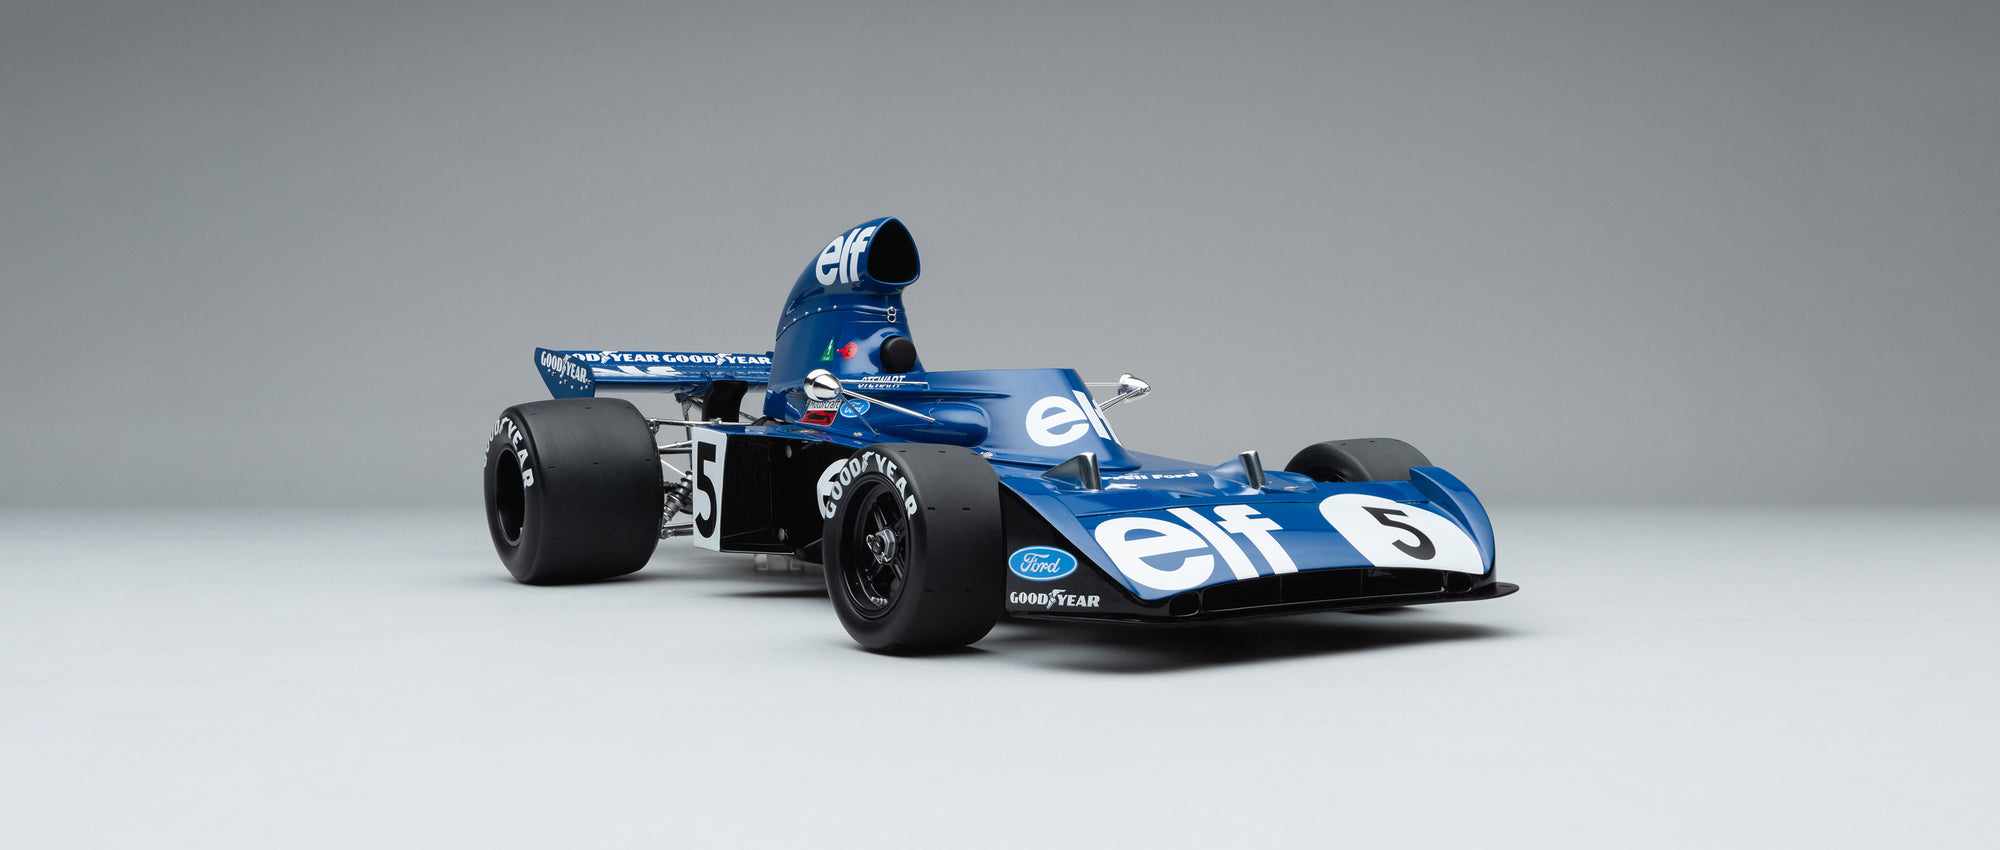 Elf Team Tyrrell 006 - 1973 German Grand Prix